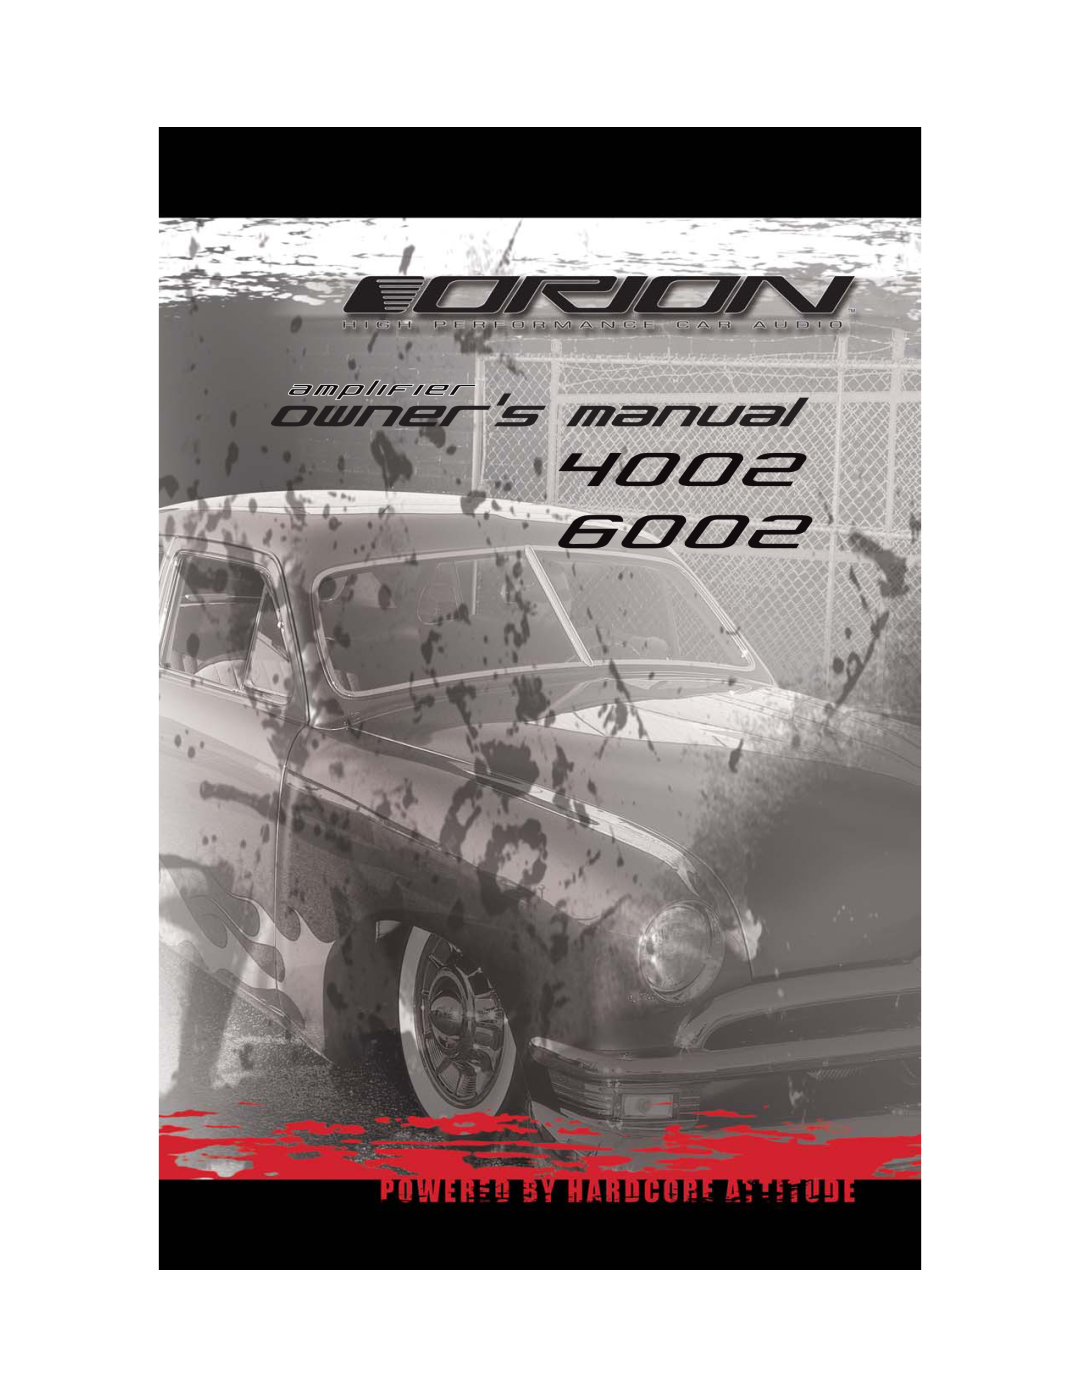 Orion Car Audio 4002, 6002 manual 